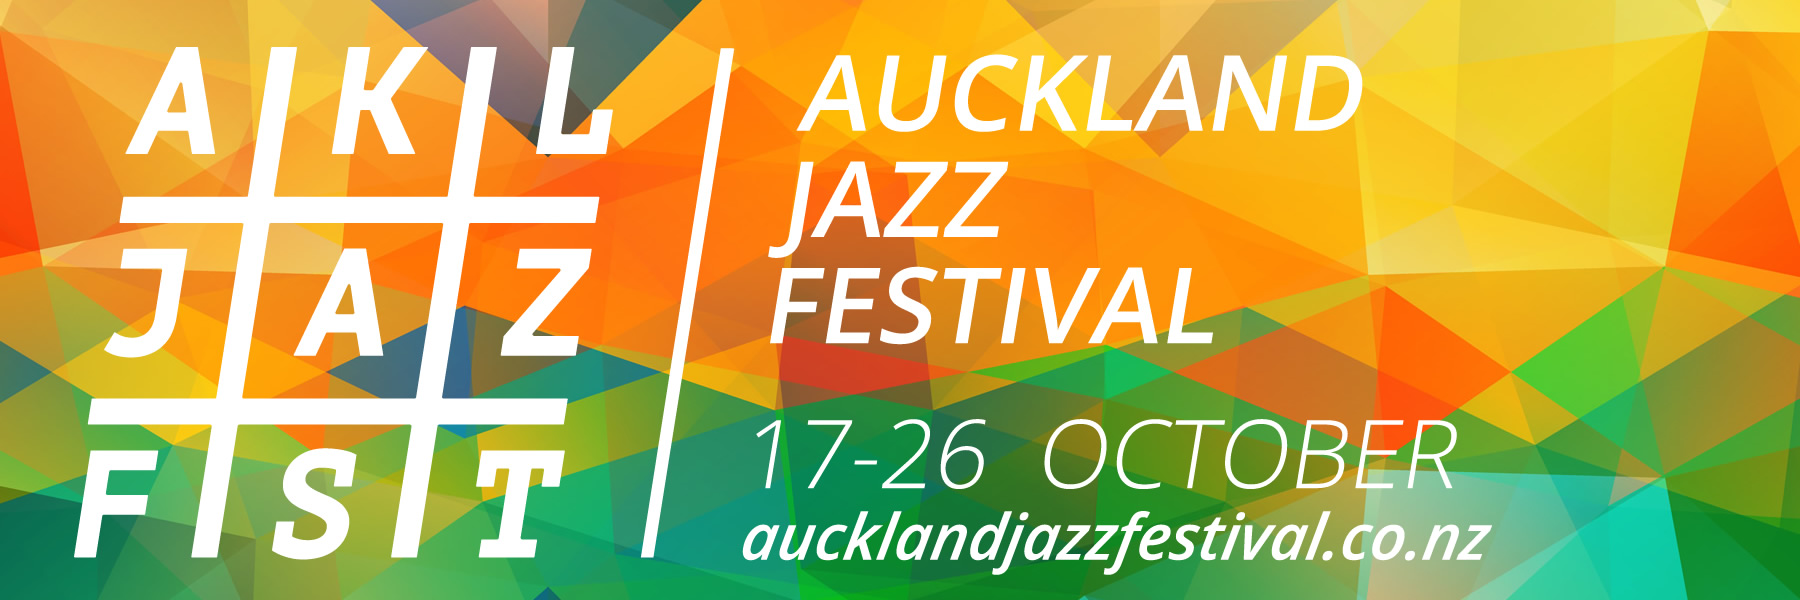 Auckland Jazz Festival 17-26 October